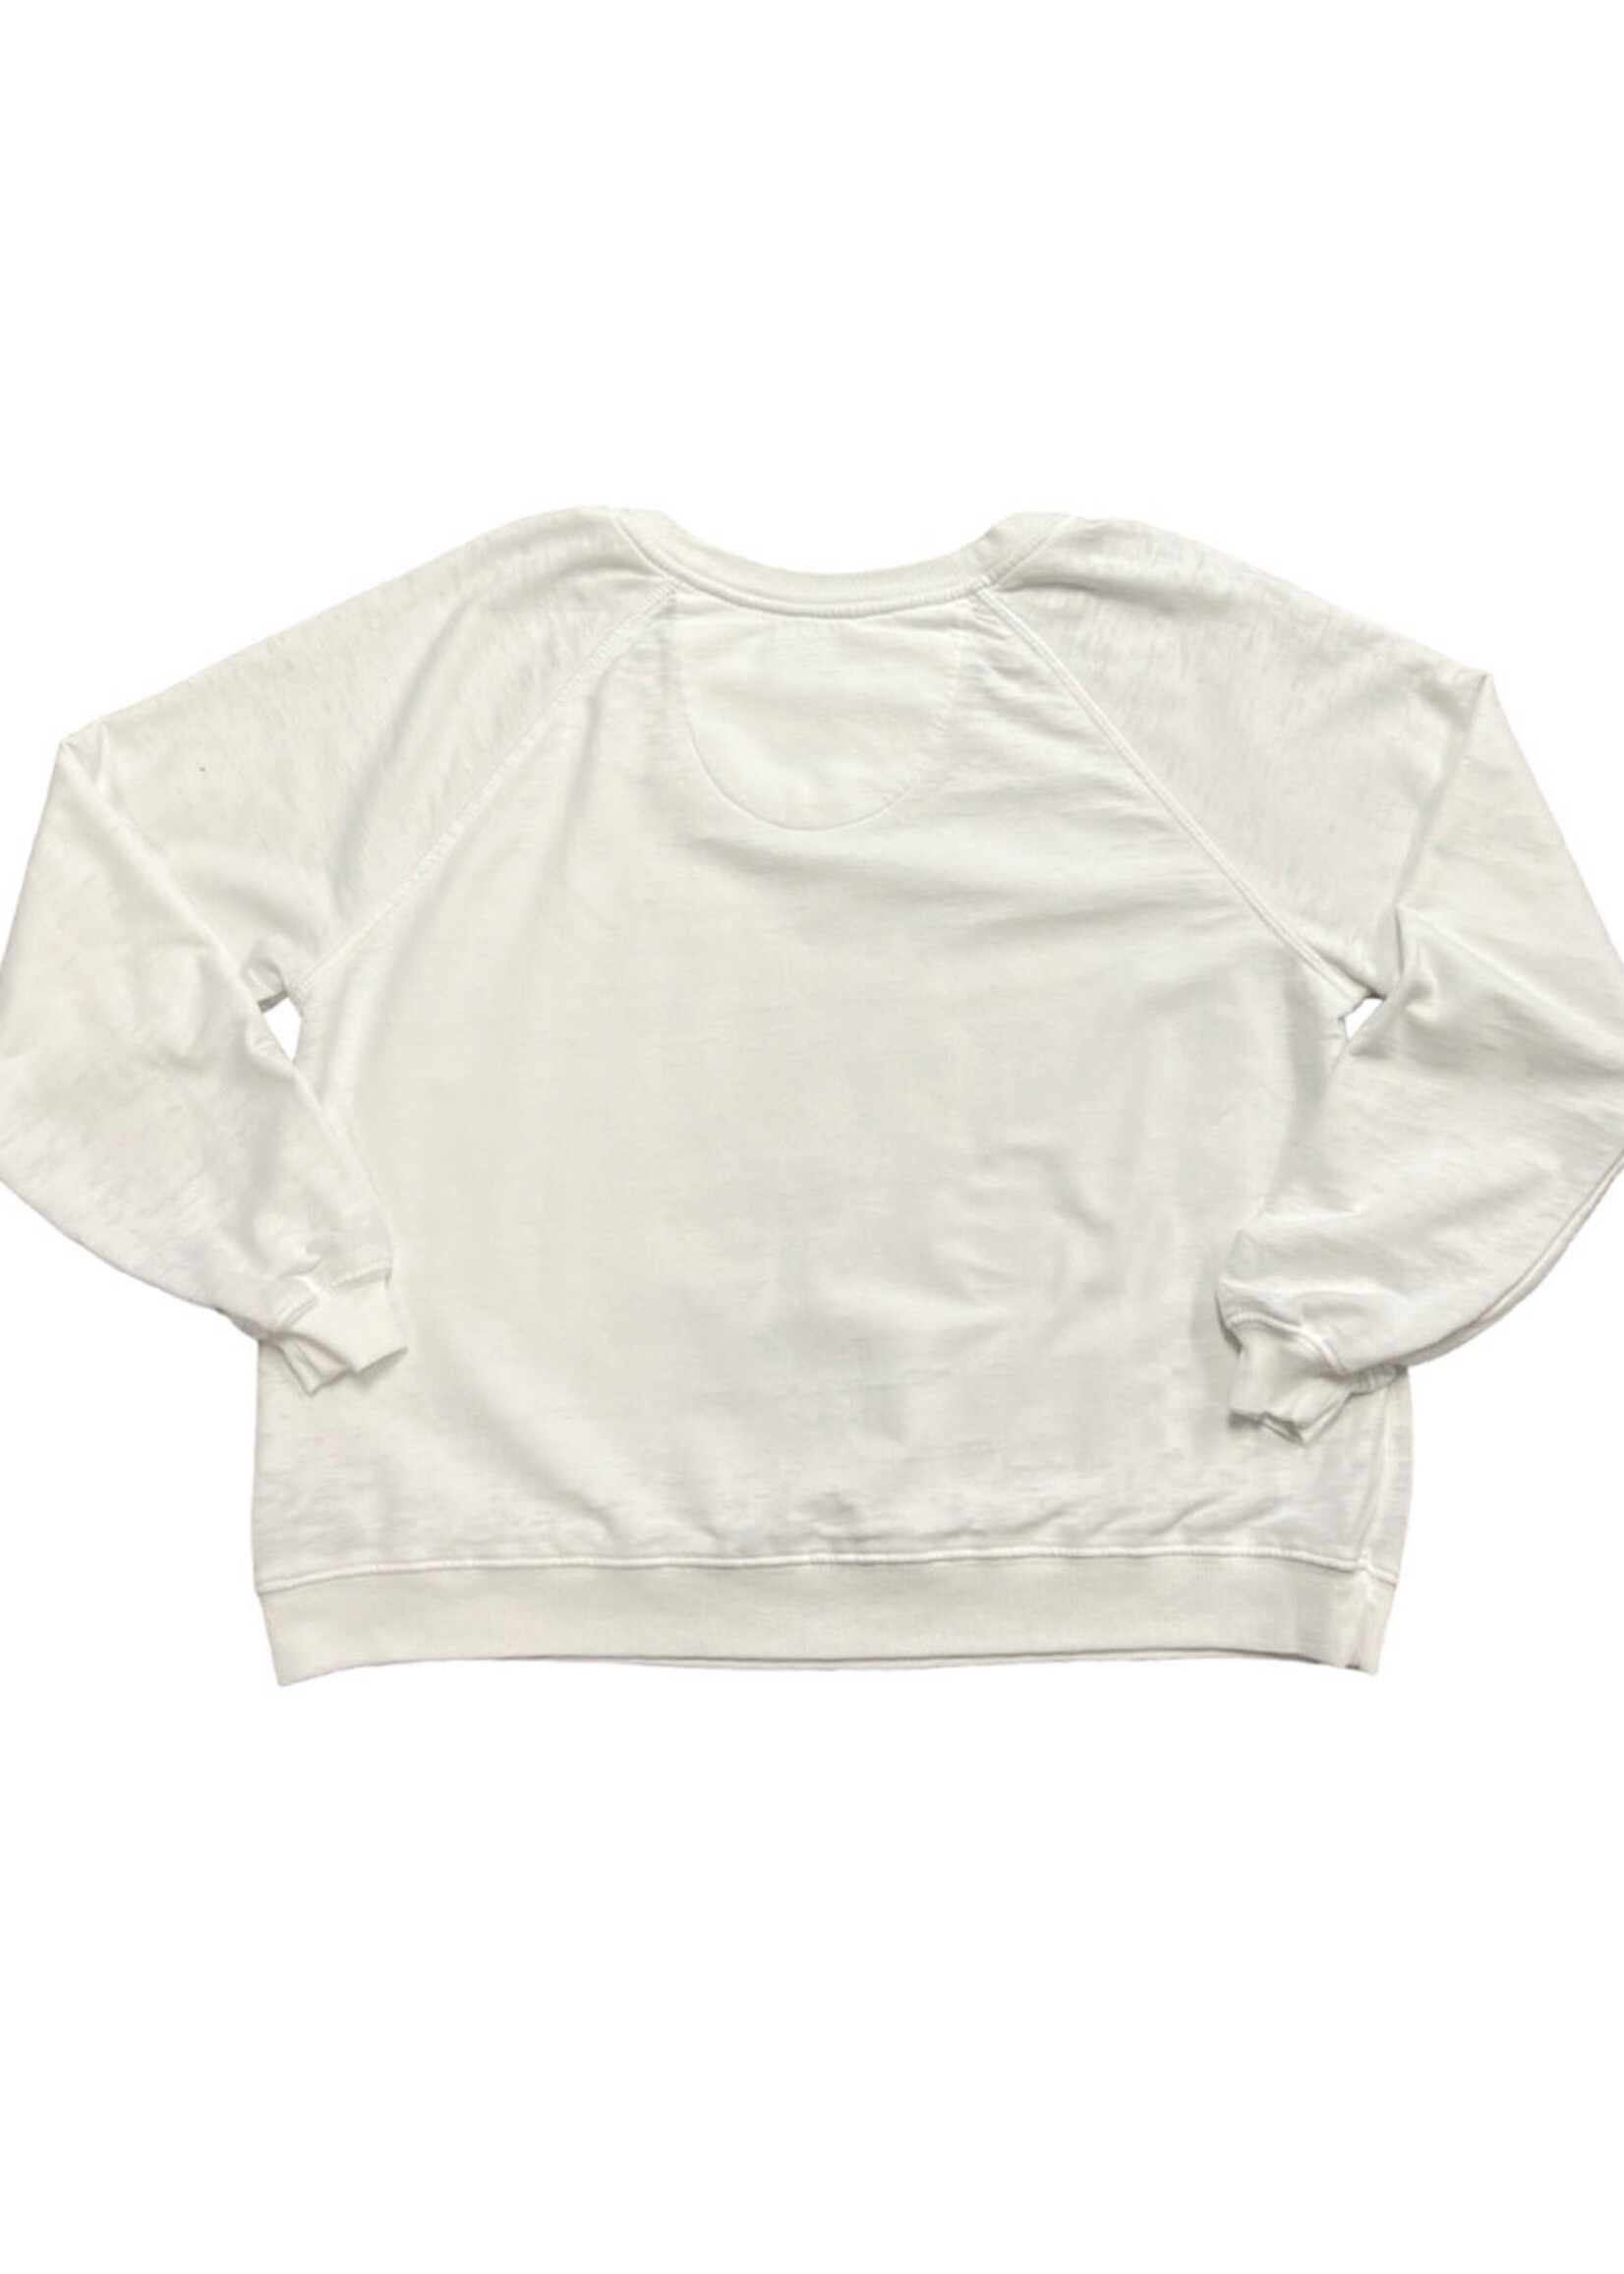 Recycled Karma Back to 80's Sweatshirt -White